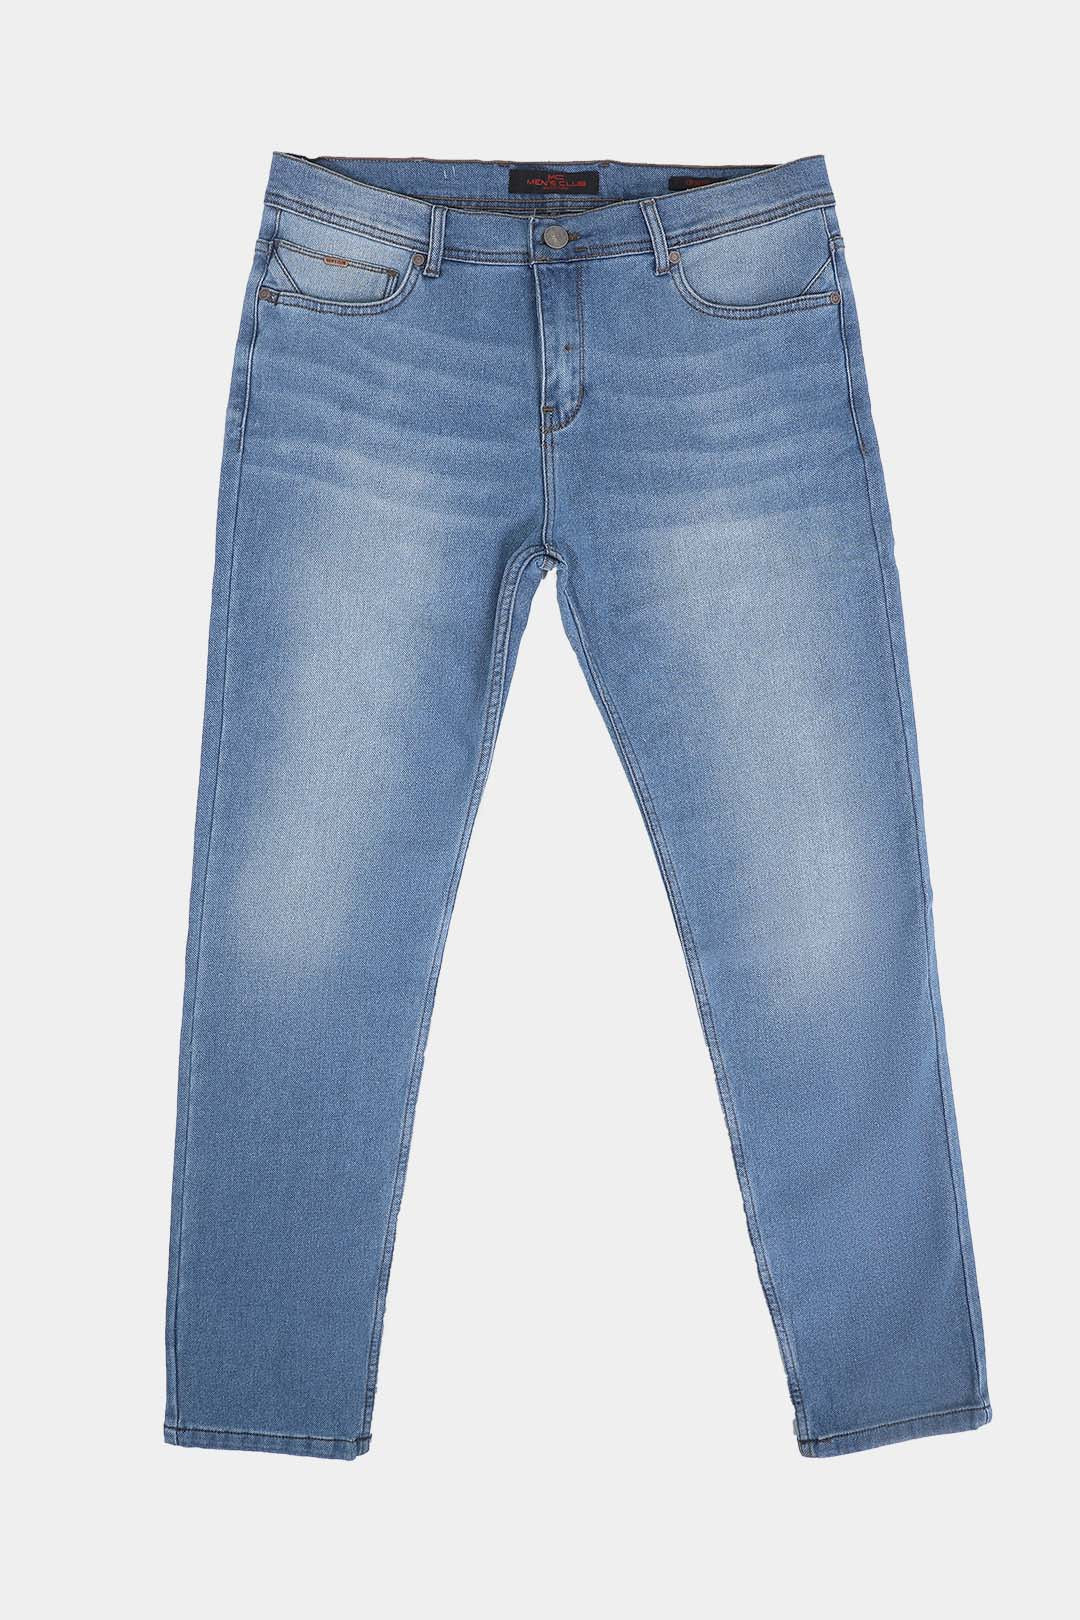 Light Blue Slim Fit Jean Pants